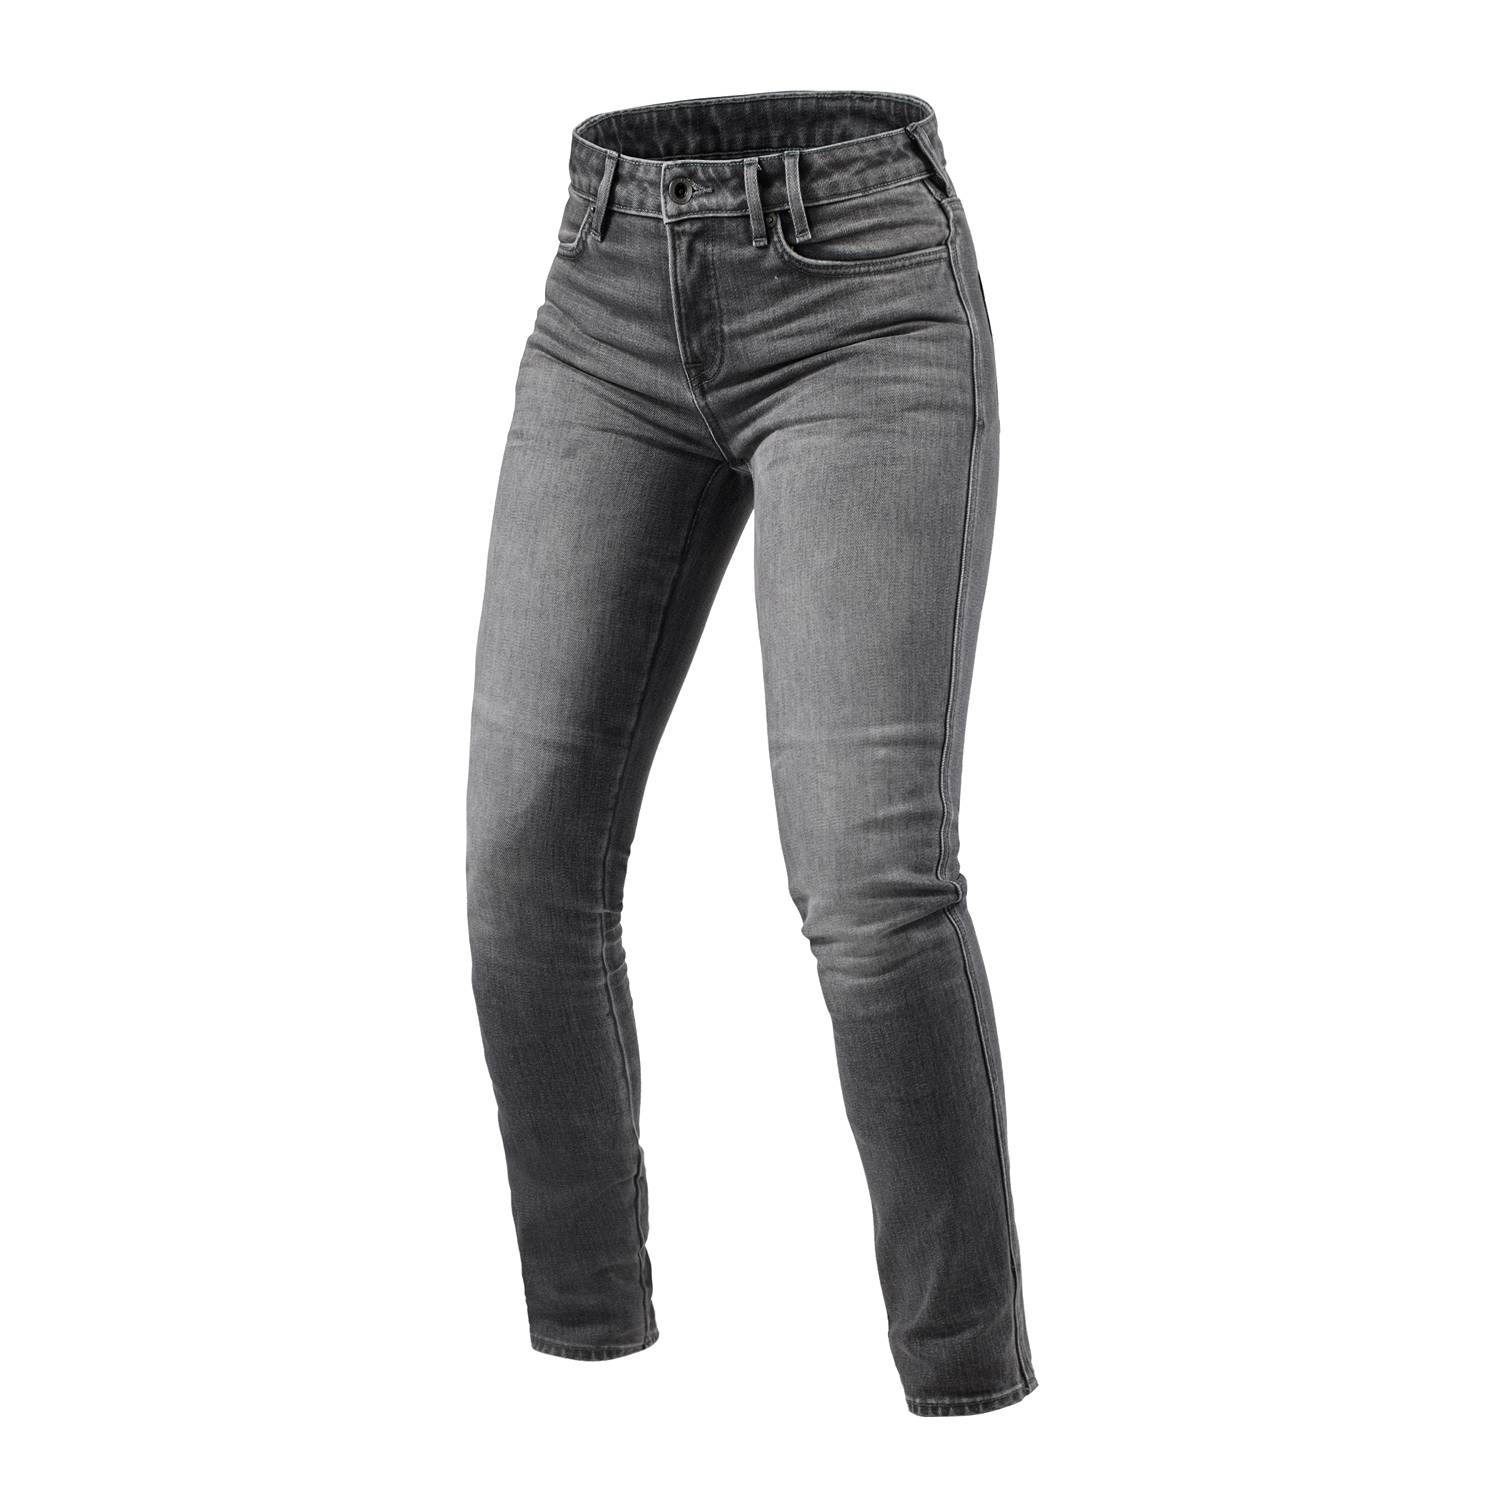 Image of REV'IT! Jeans Shelby 2 Ladies SK Medium Grey Stone L32 Size L32/W28 EN